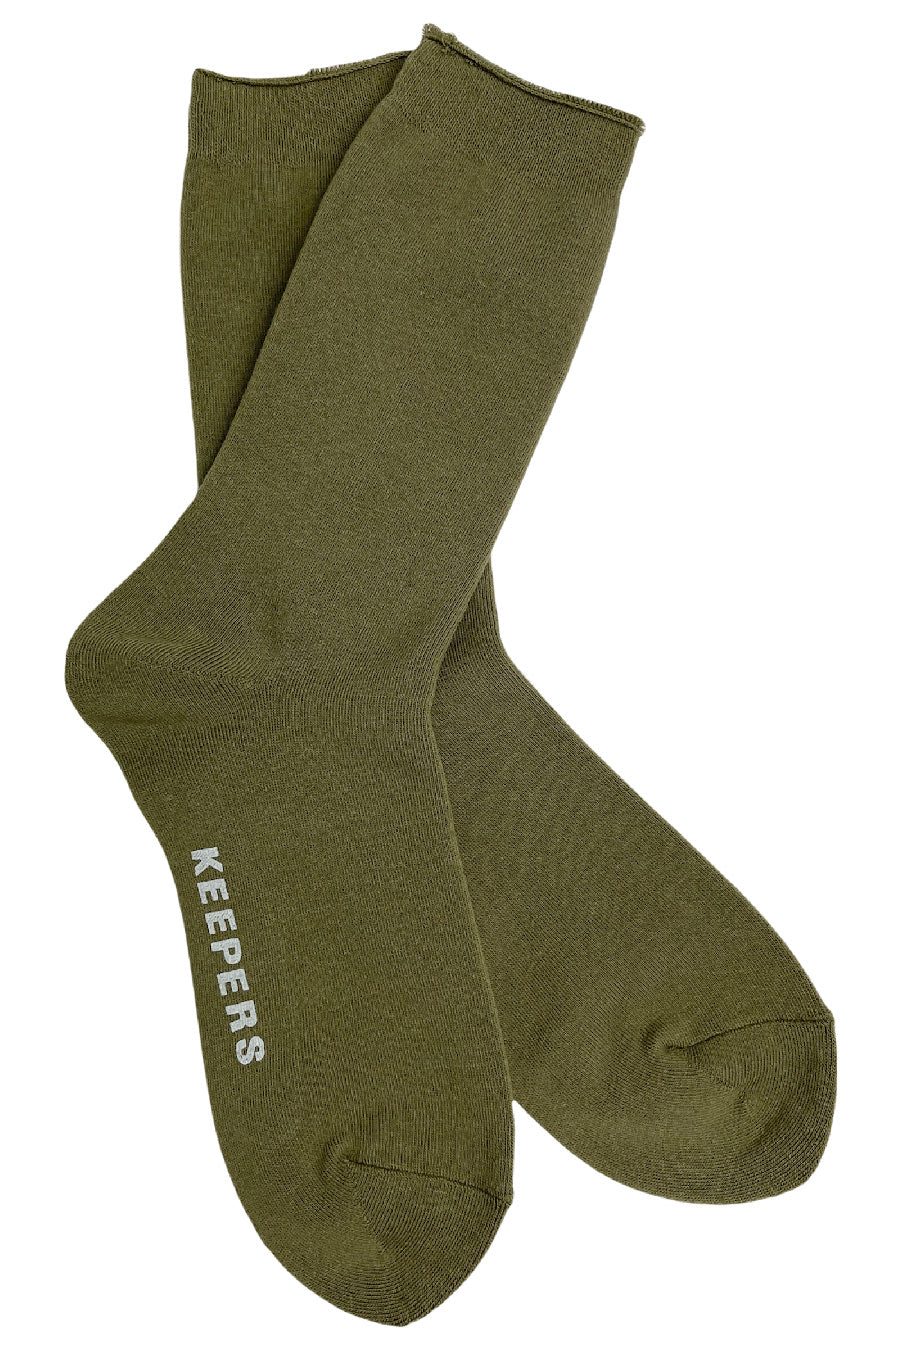 Keepers Pile Socks Socks Socks SOCKS Regular Length Total Pile PILE Made in Japan Men's Women's American Casual Camping Outdoor